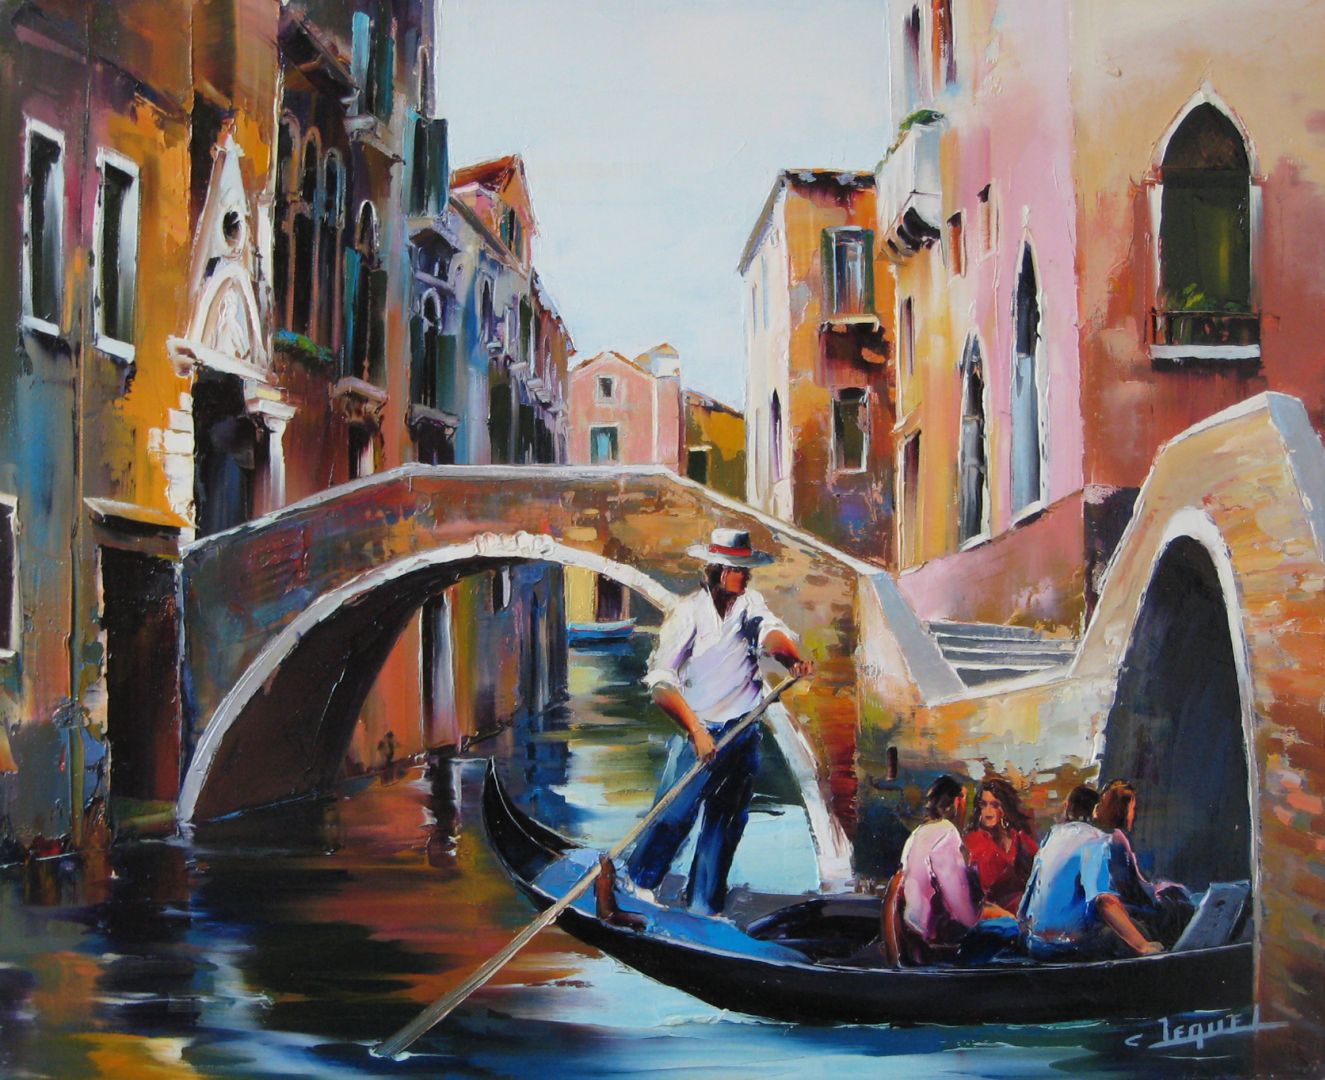 Venise (Italie)